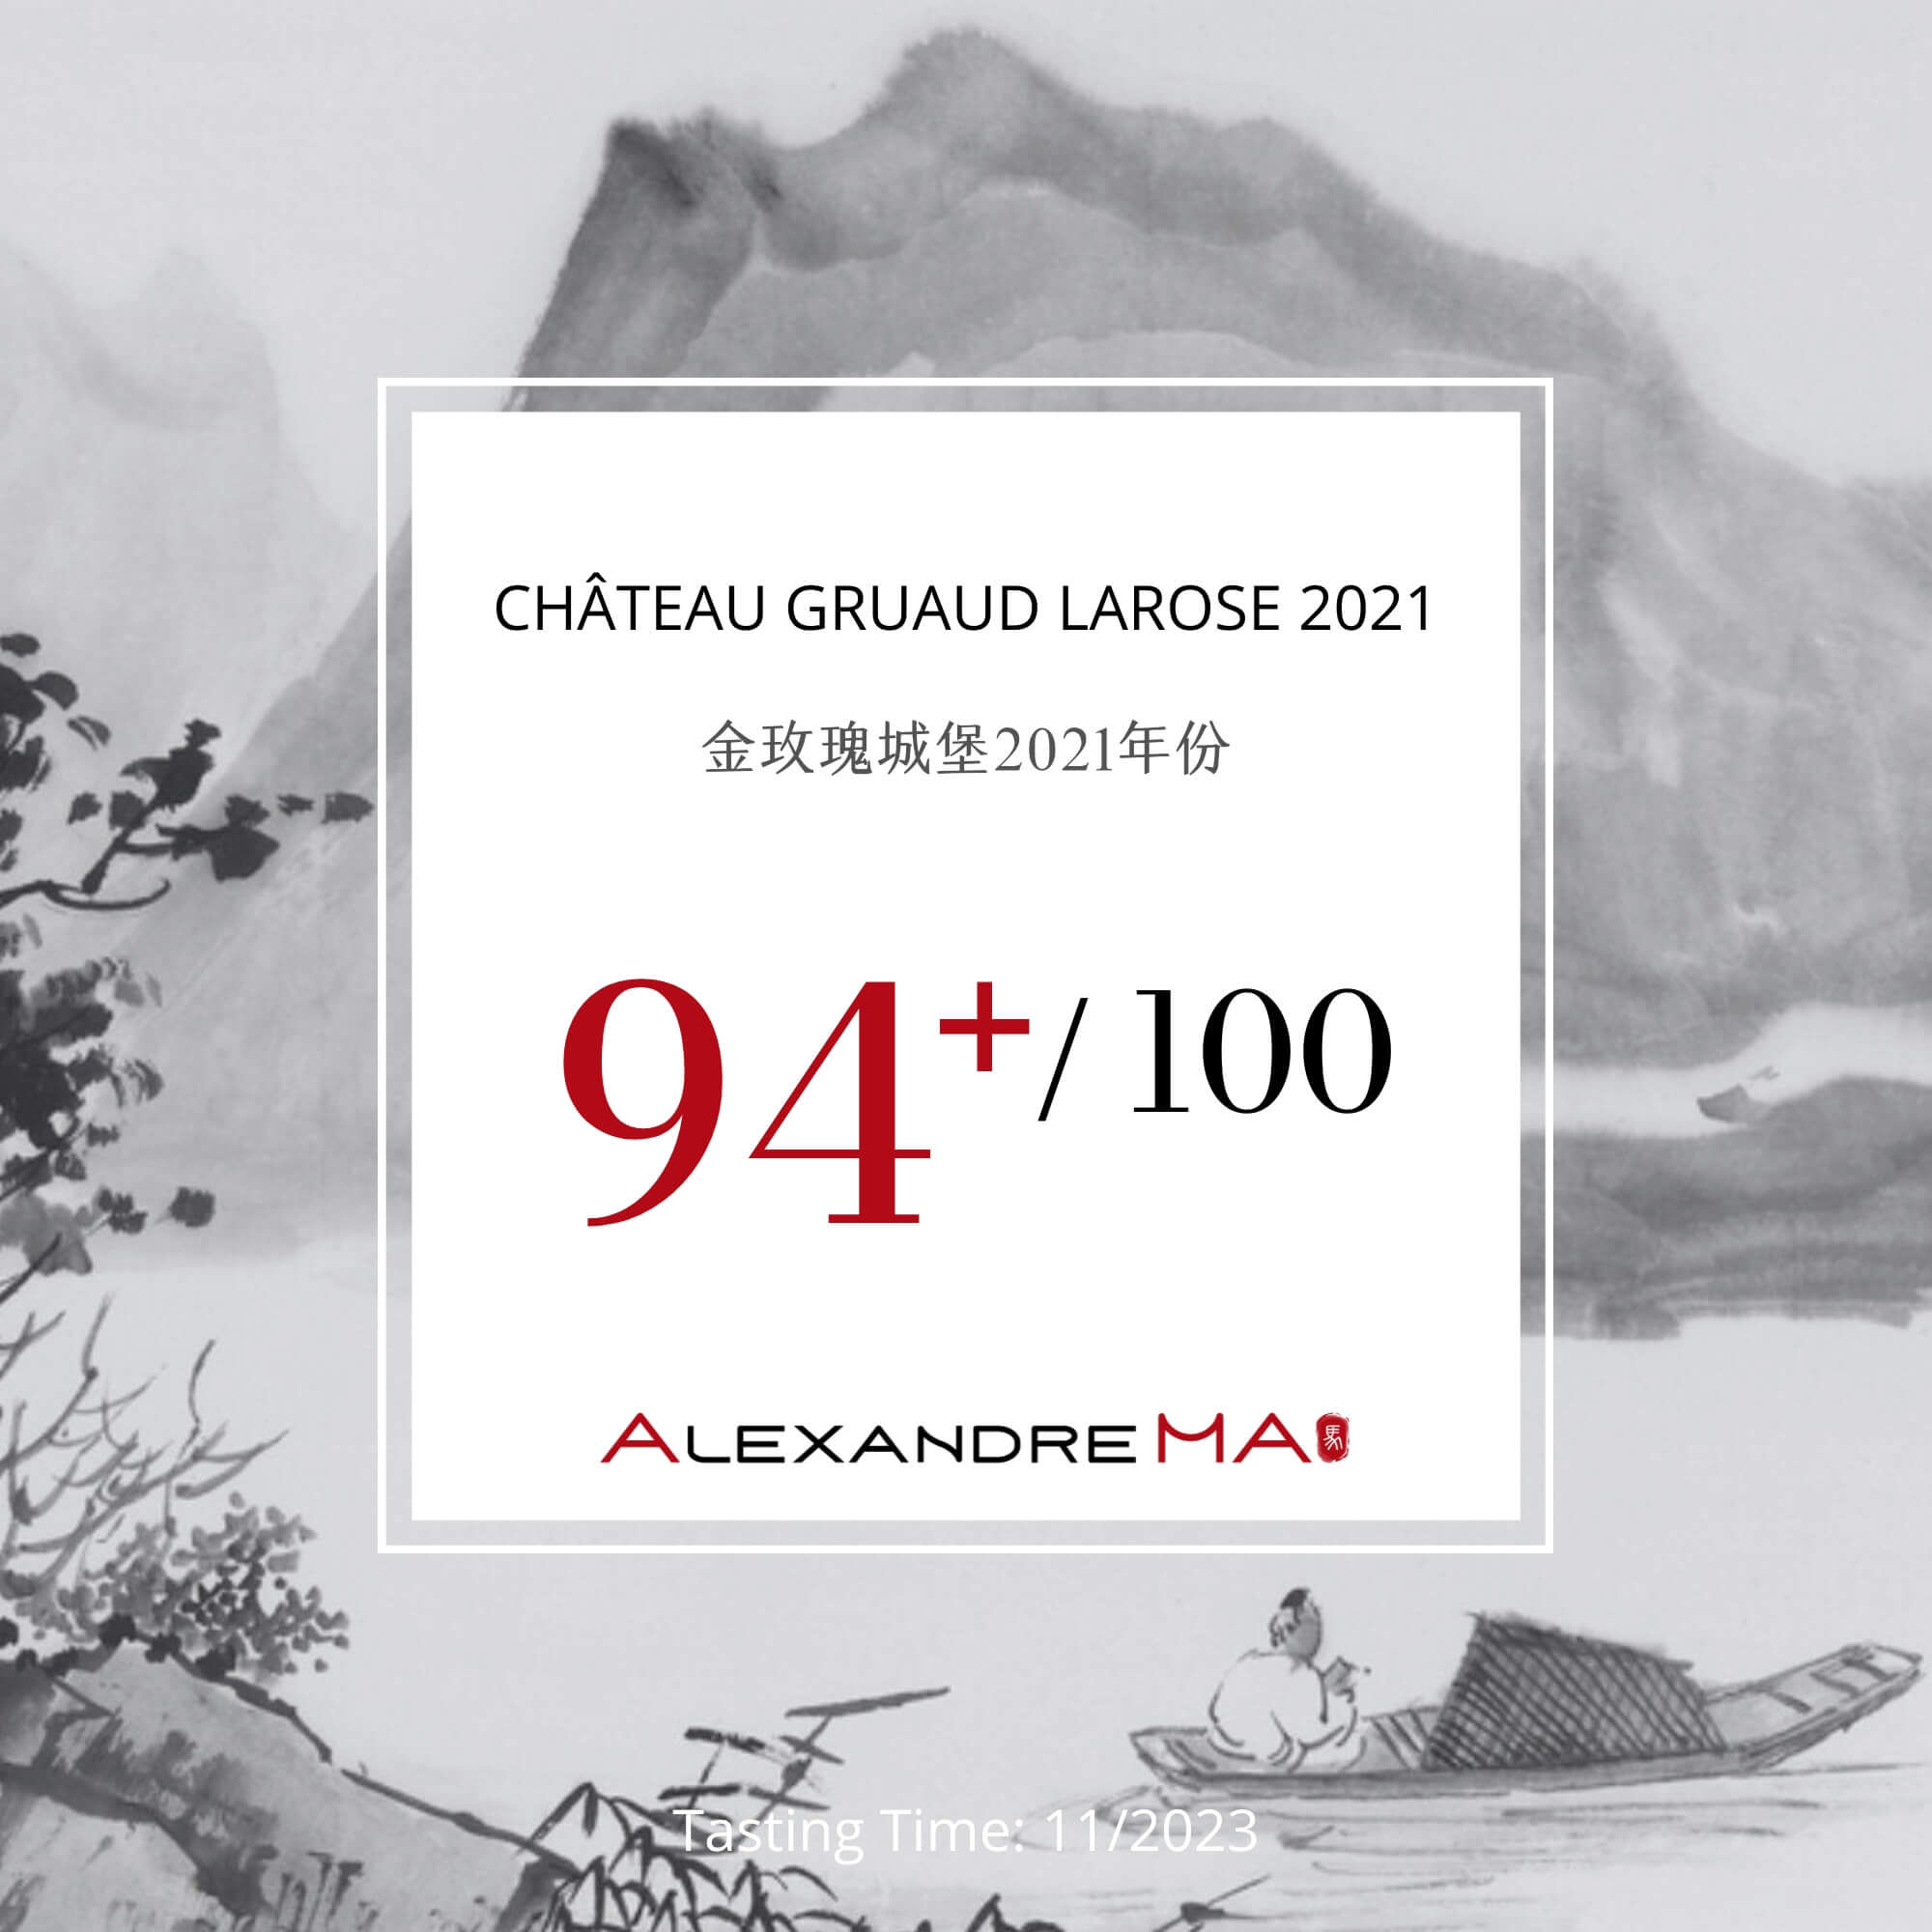 Château Gruaud Larose 2021 金玫瑰城堡 - Alexandre Ma